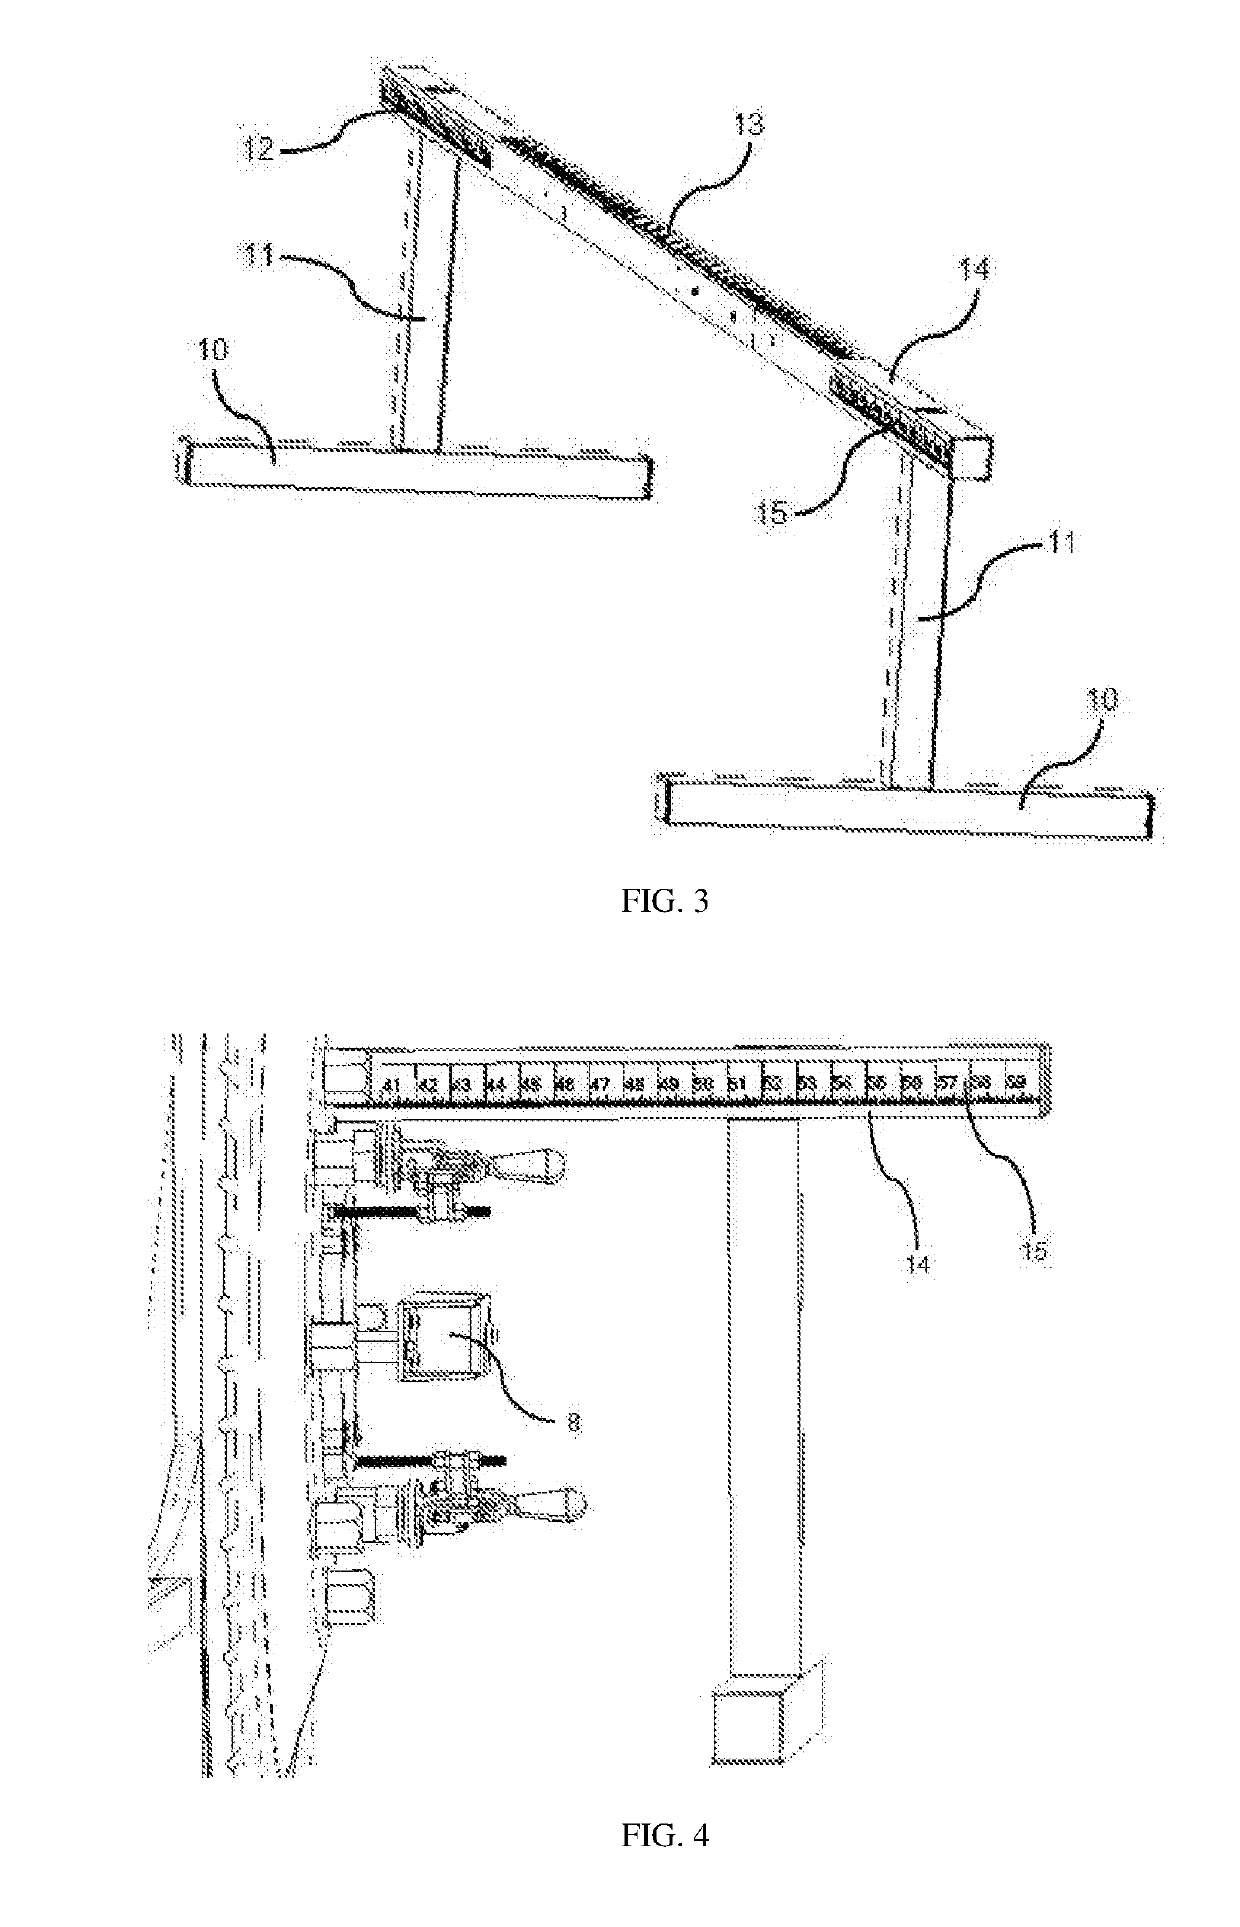 Portable Toe Angle Measurement Apparatus and Method